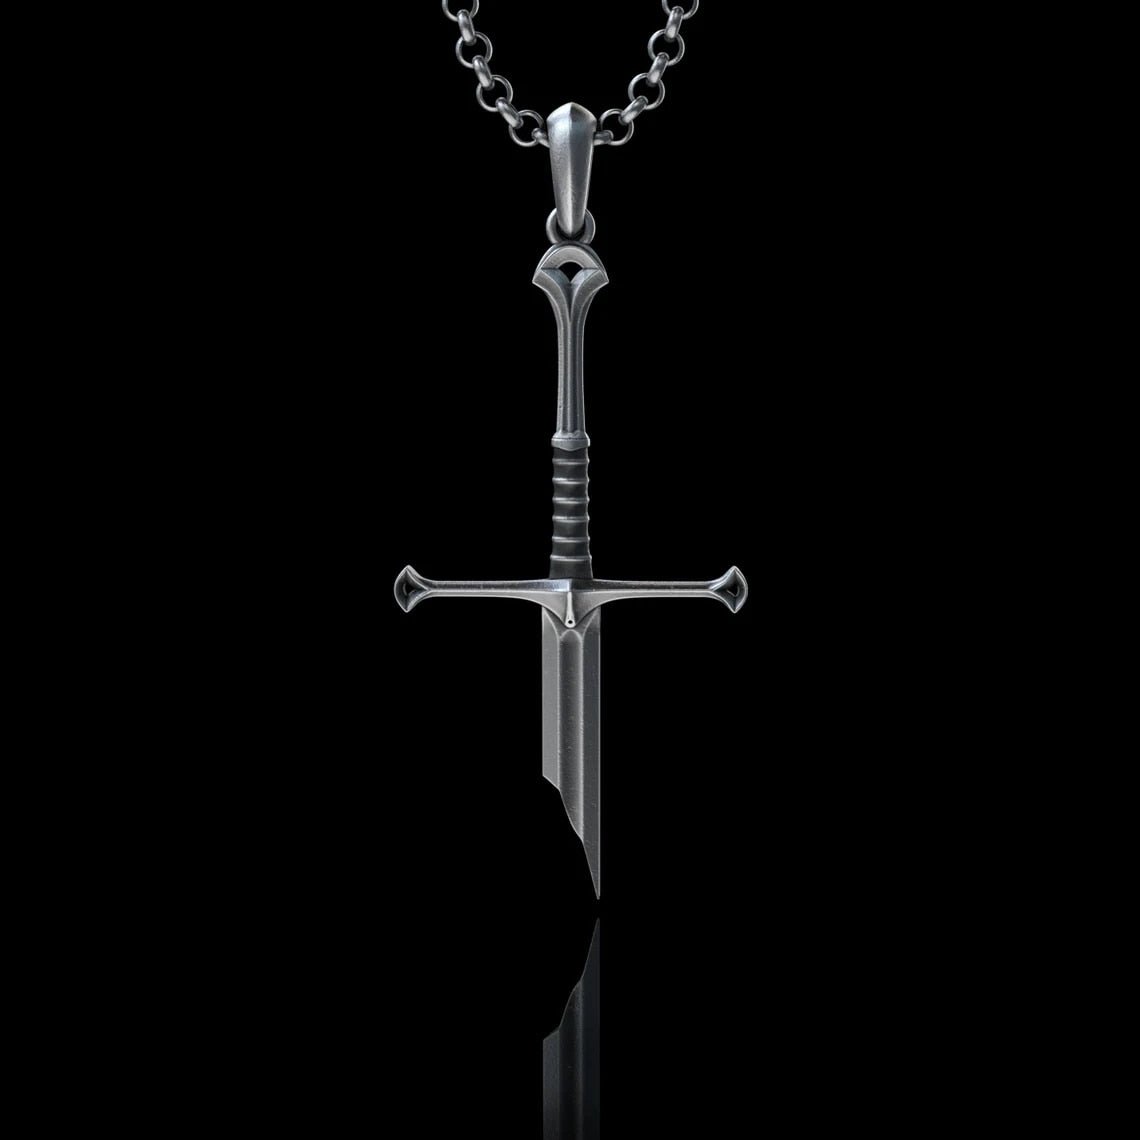 Silver-plated Broken Sword Pendant